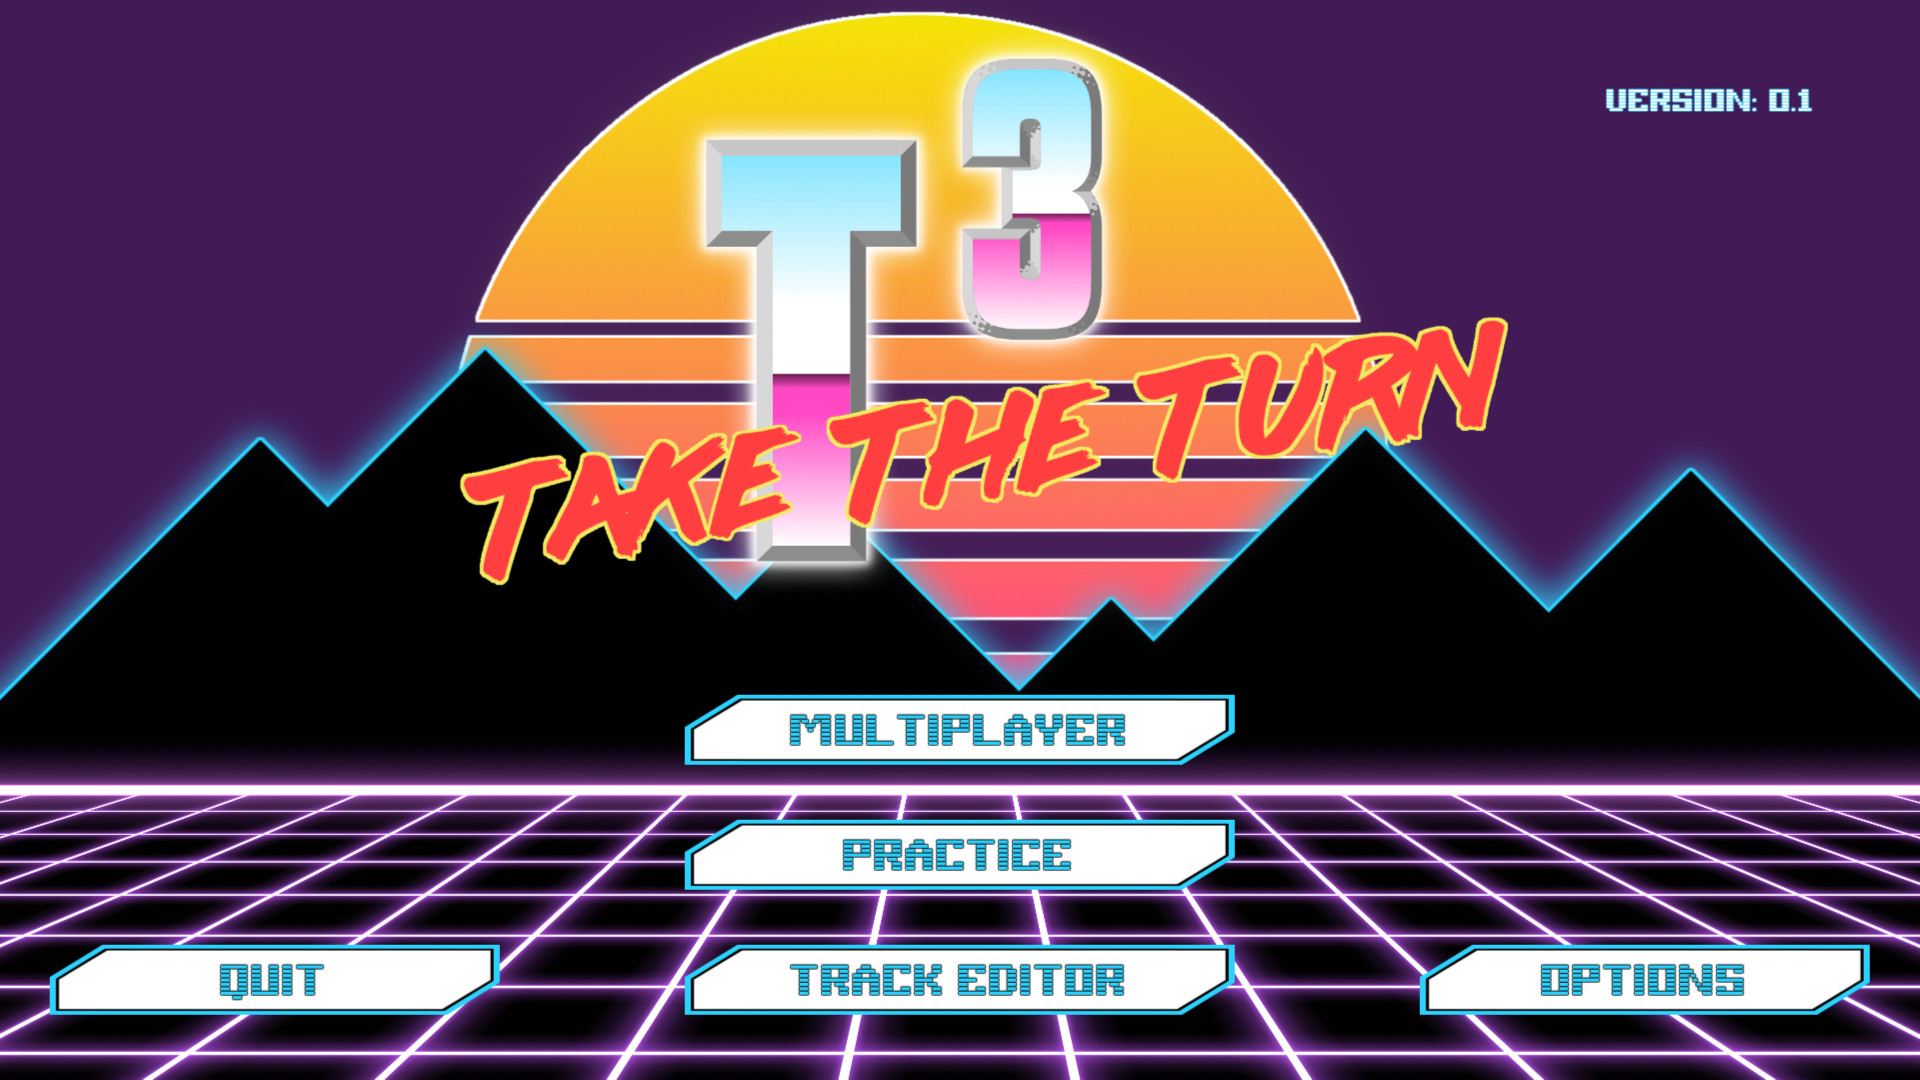 T3 - Take the Turn Free Download